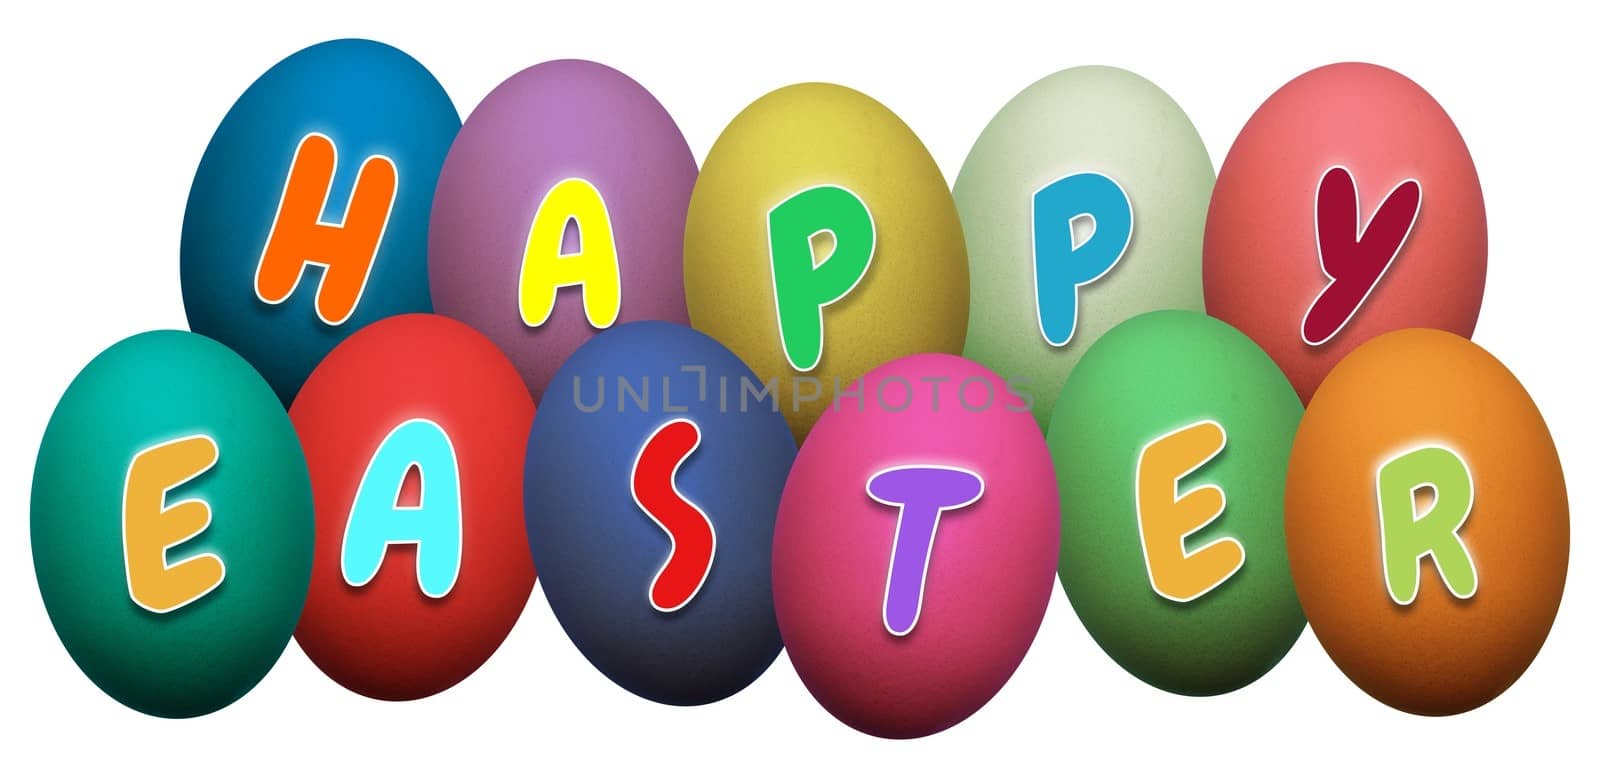 Happy Easter Eggs by darrenwhittingham